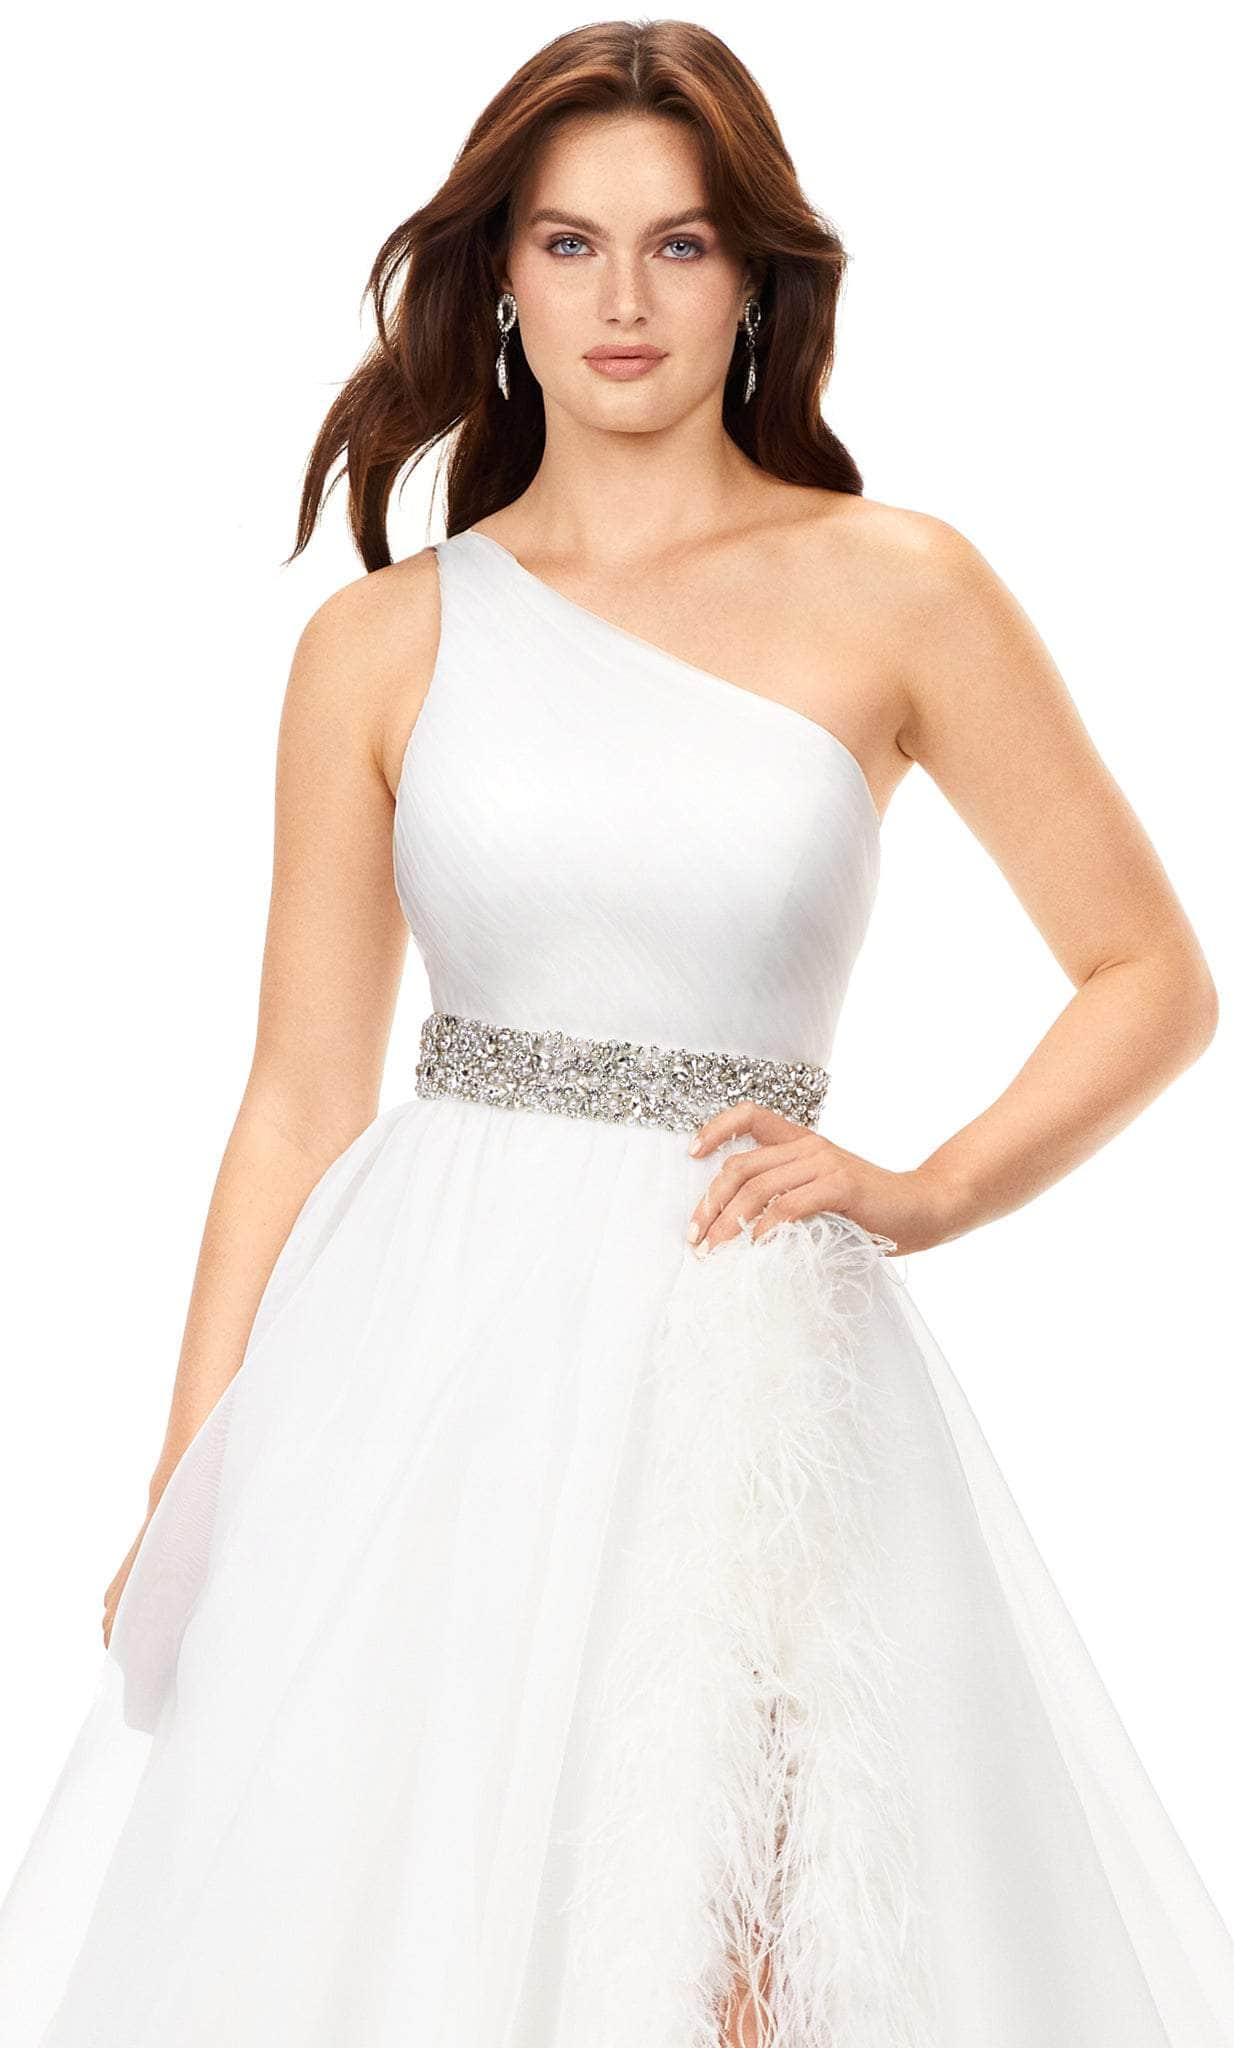 Ashley Lauren 11309 - Asymmetrical Appliqued Ballgown Special Occasion Dress